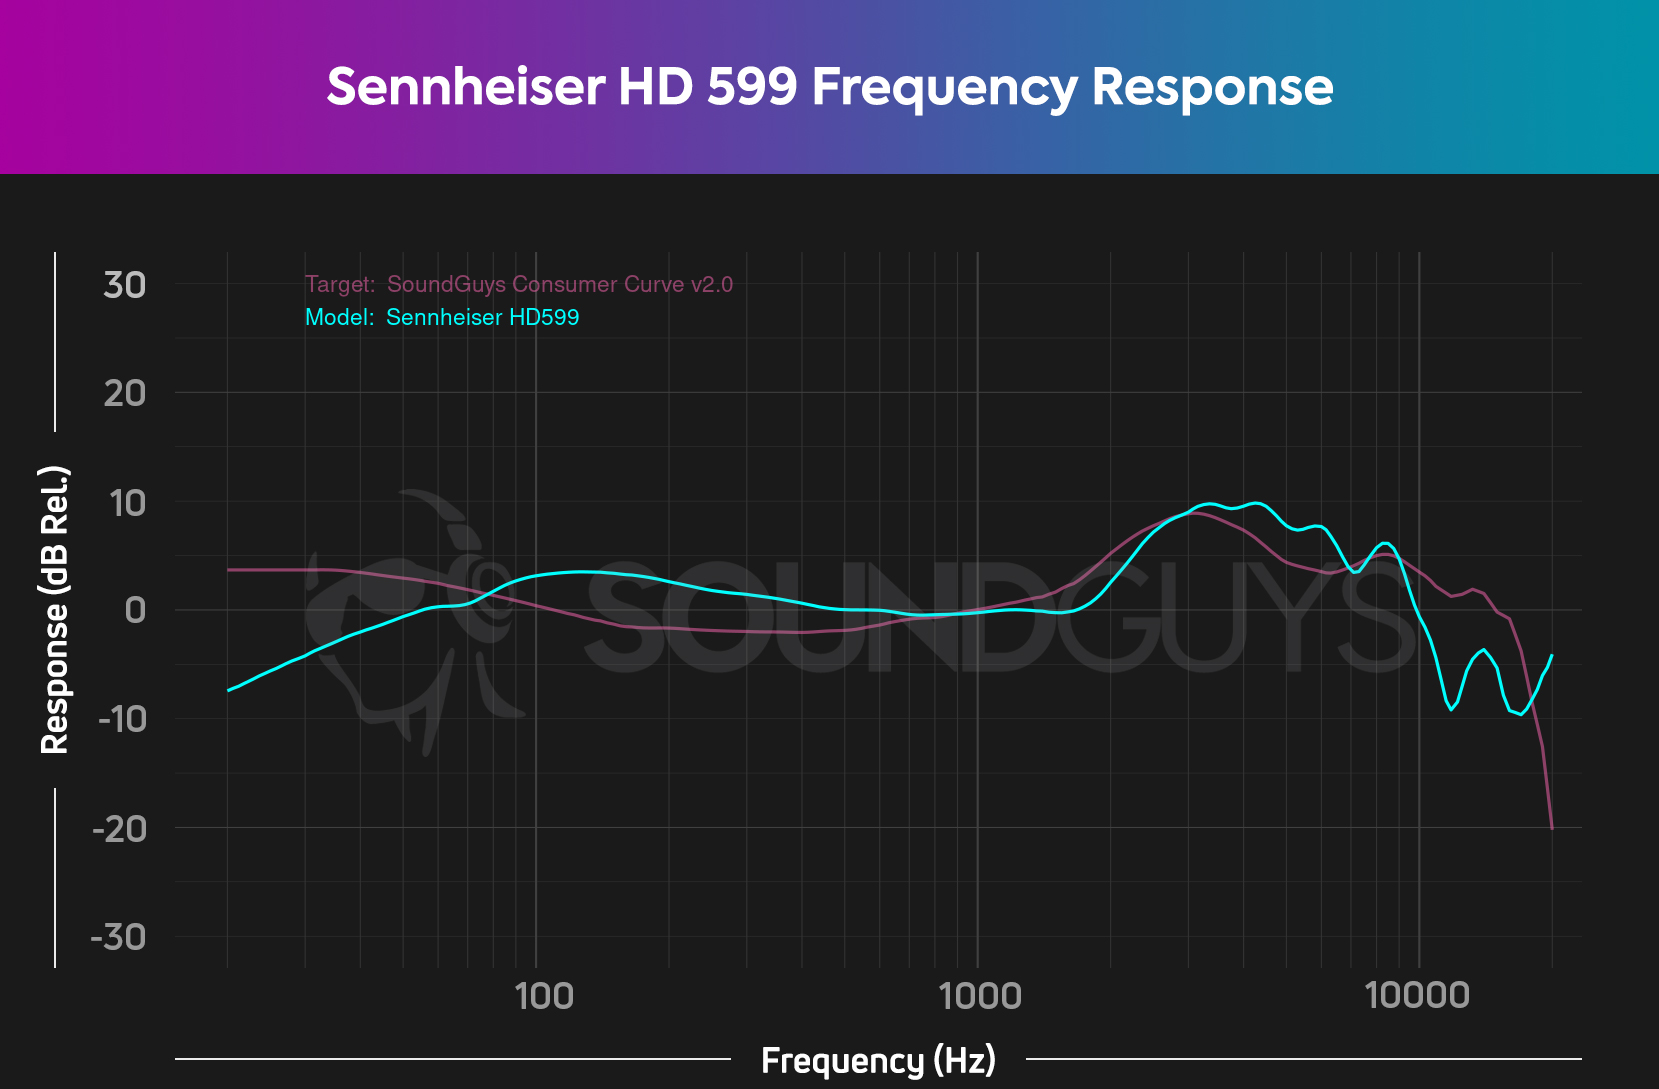 Our house curve compared against the Sennheiser HD 599.